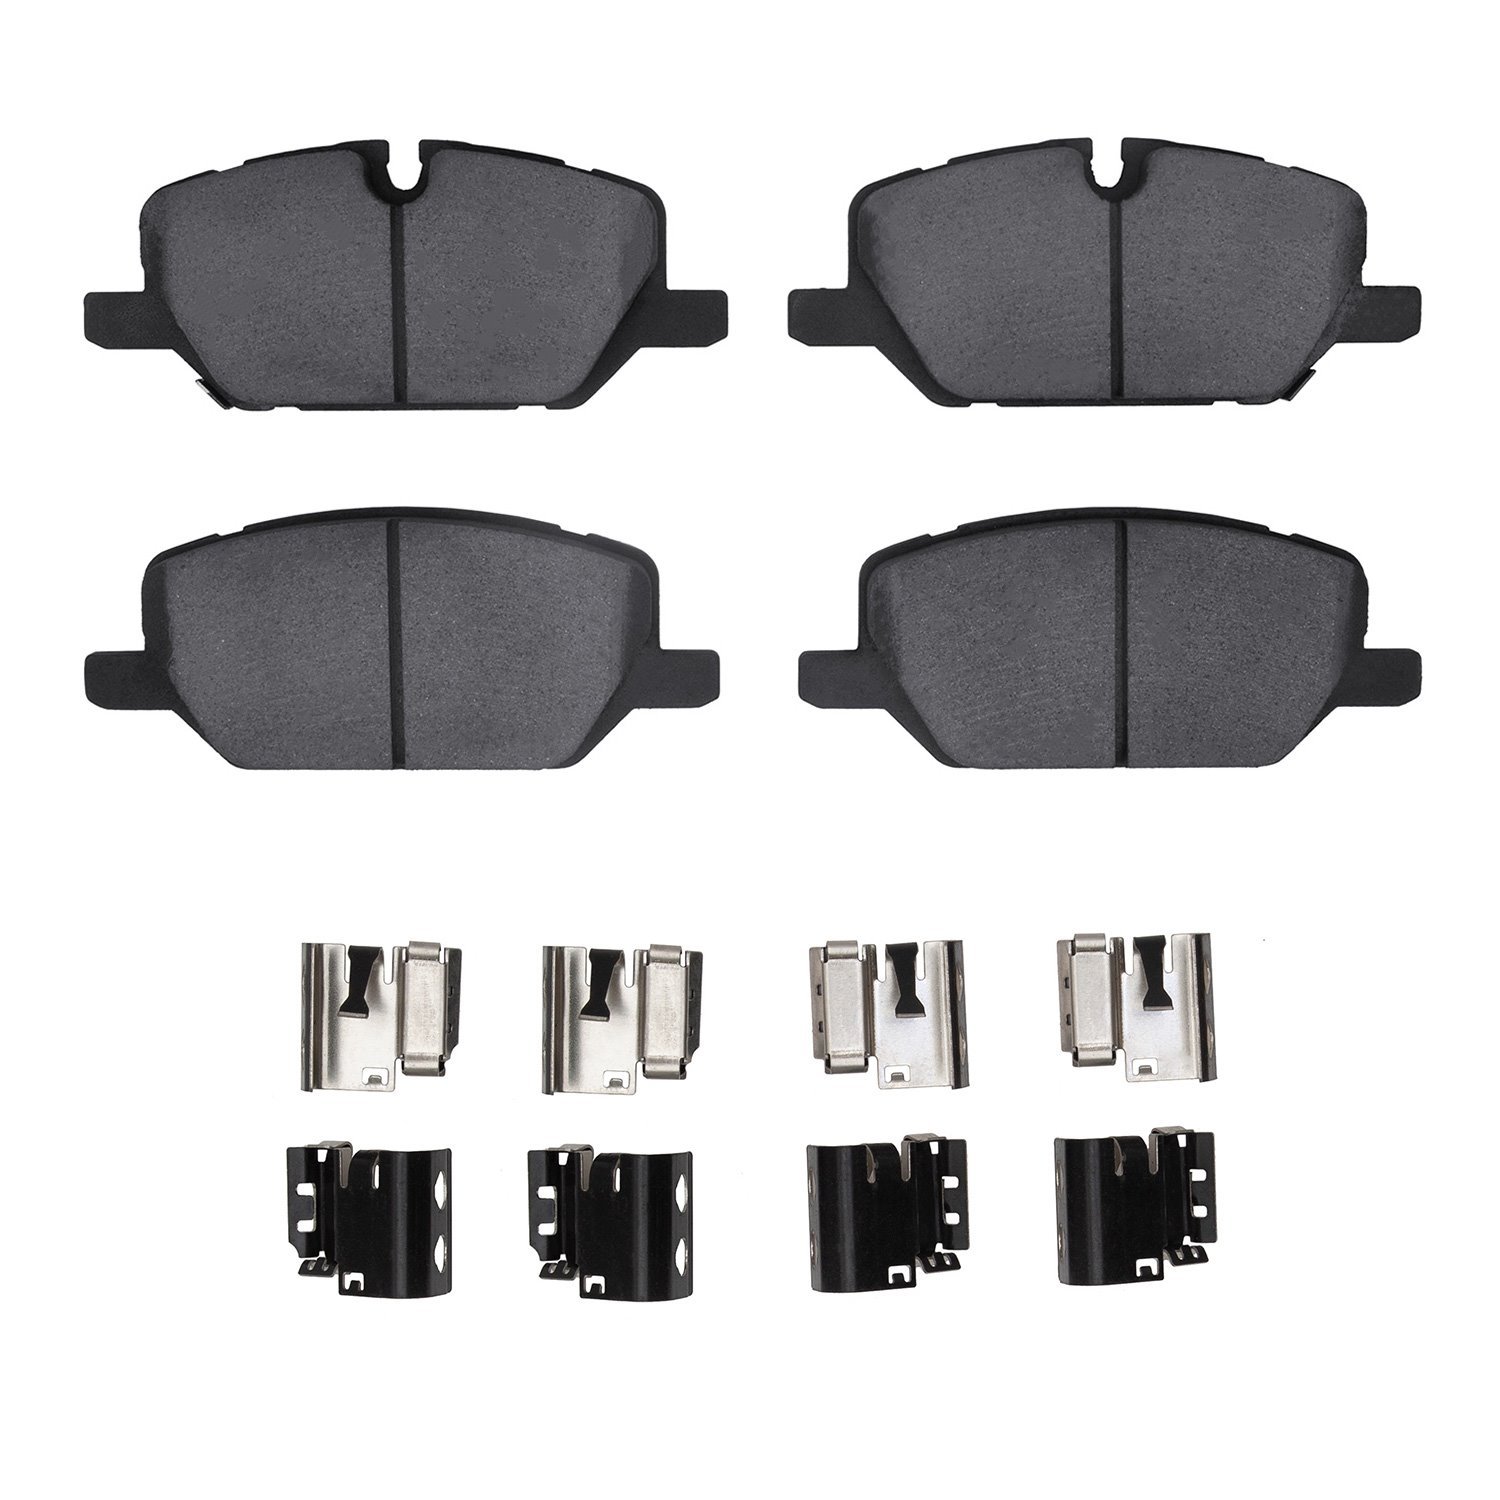 1310-2314-01 3000-Series Ceramic Brake Pads & Hardware Kit, Fits Select GM, Position: Front